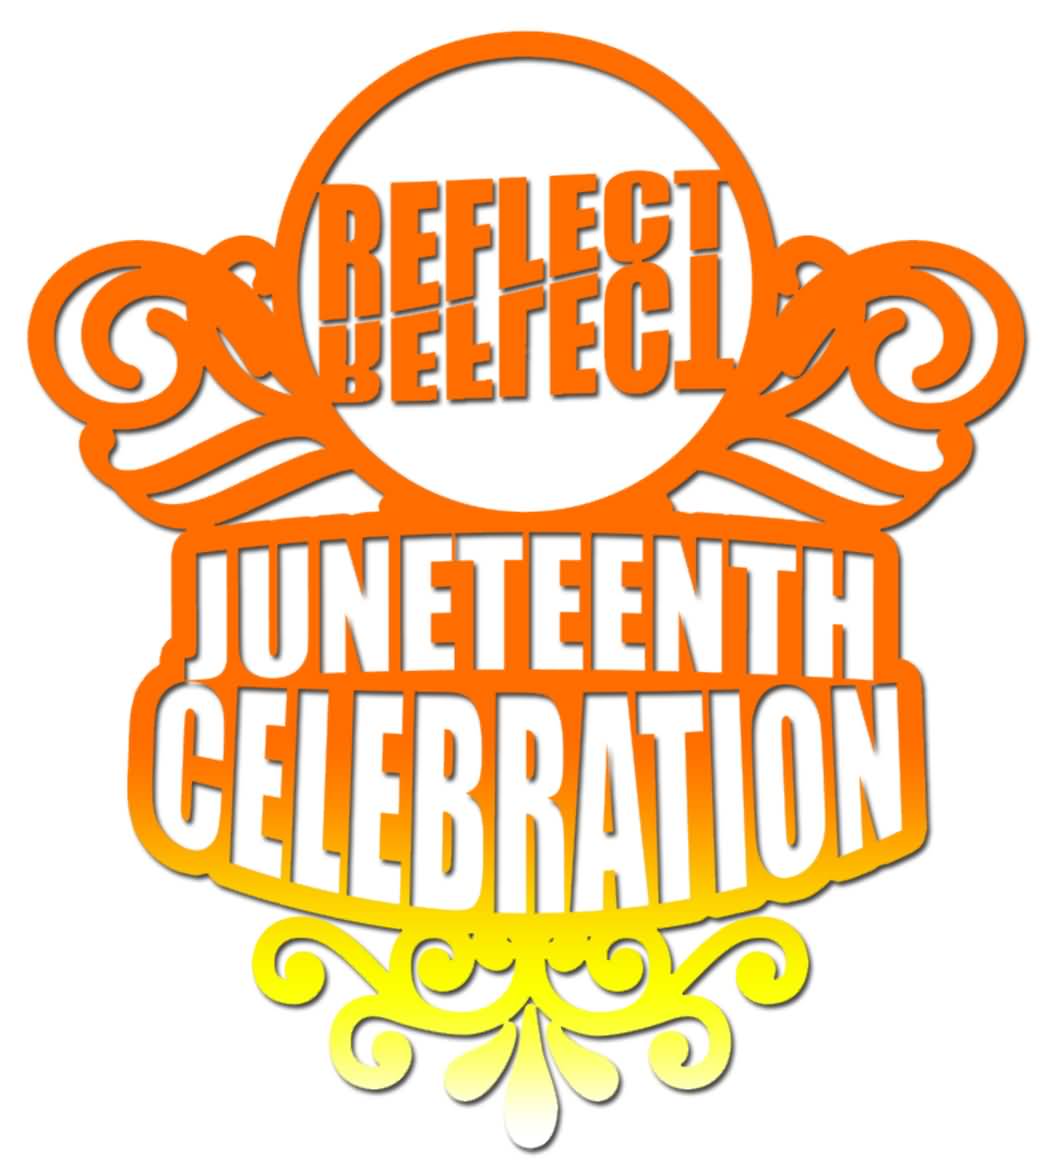 Reflect Juneteenth Celebration Graphic Image